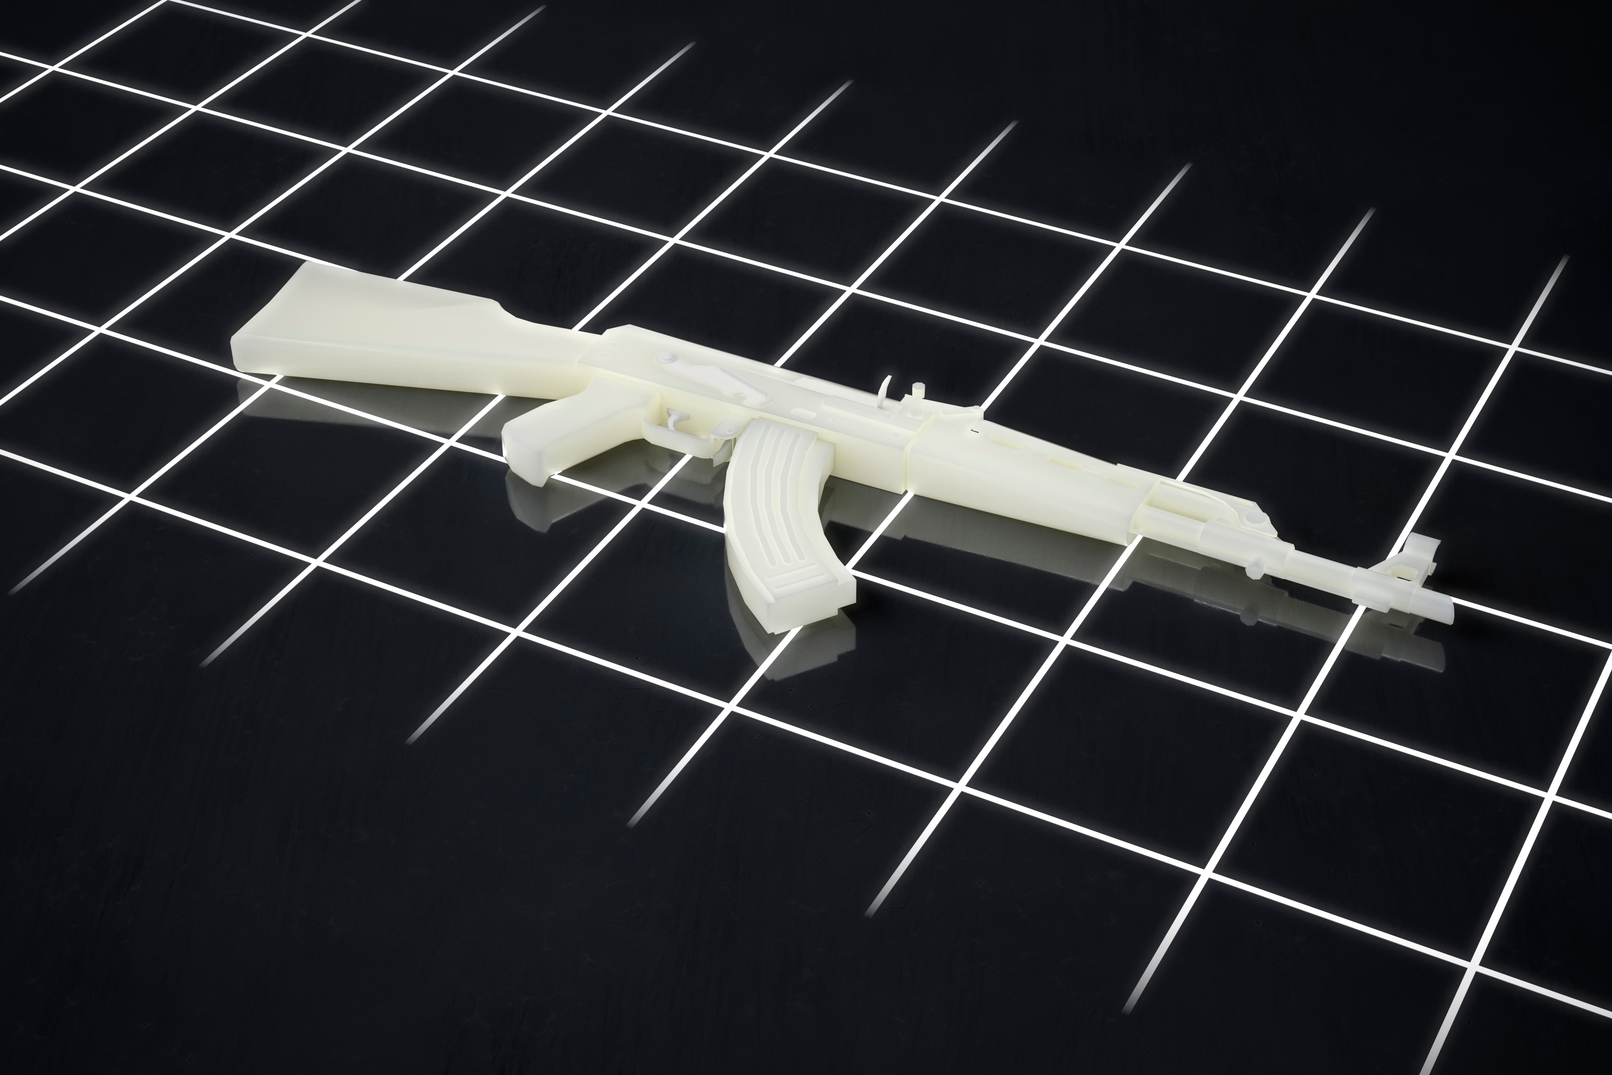 Federal Judge Issues Preliminary Injunction Extending Ban on Internet Publication of 3D Gun Blueprints